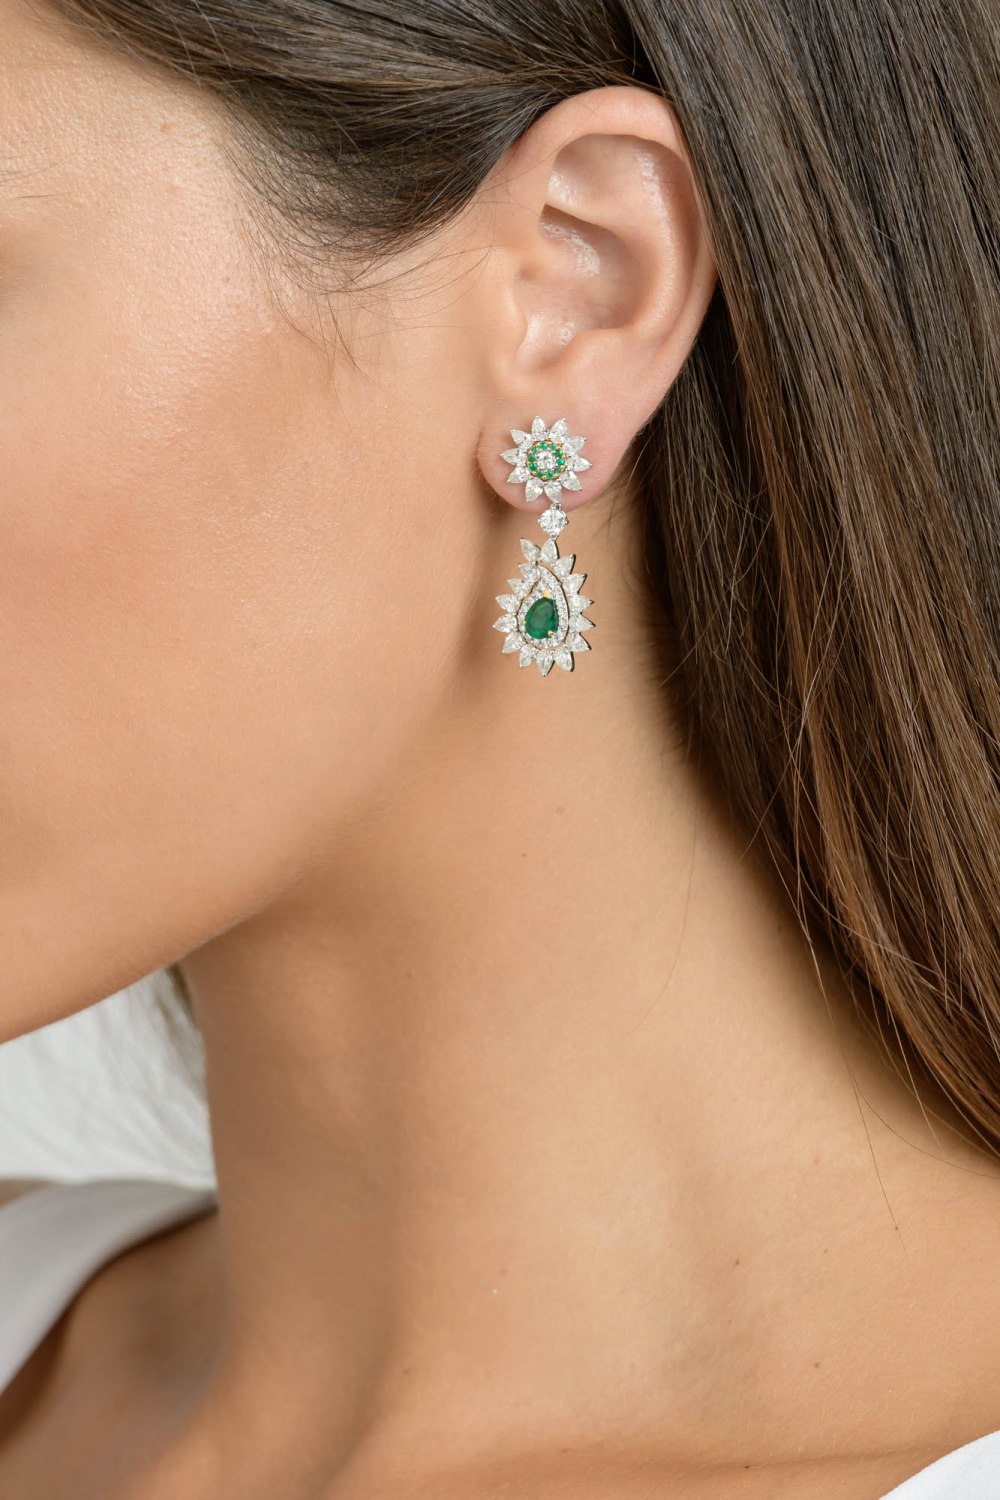 DiamondX 9K Gold 5CT Emerald Cut Cluster Setting Dangle Earrings  China  Jewelry and Dangle Earrings price  MadeinChinacom